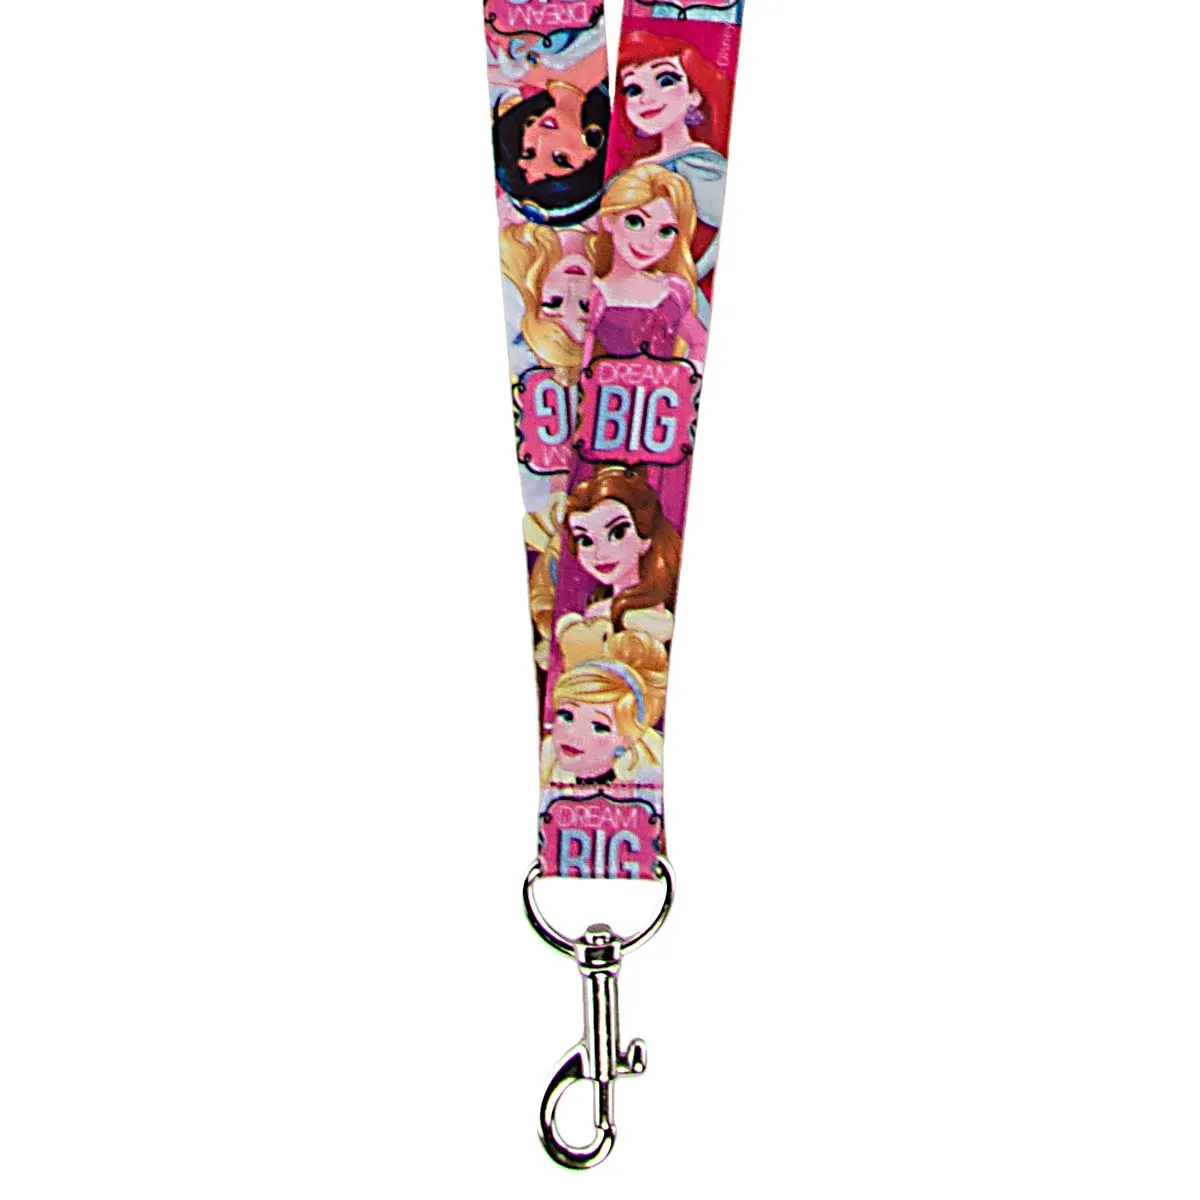 NEW Disney Princess Dream Big Lanyard Keychain pink 19.5 in. long w/ met... - $5.95